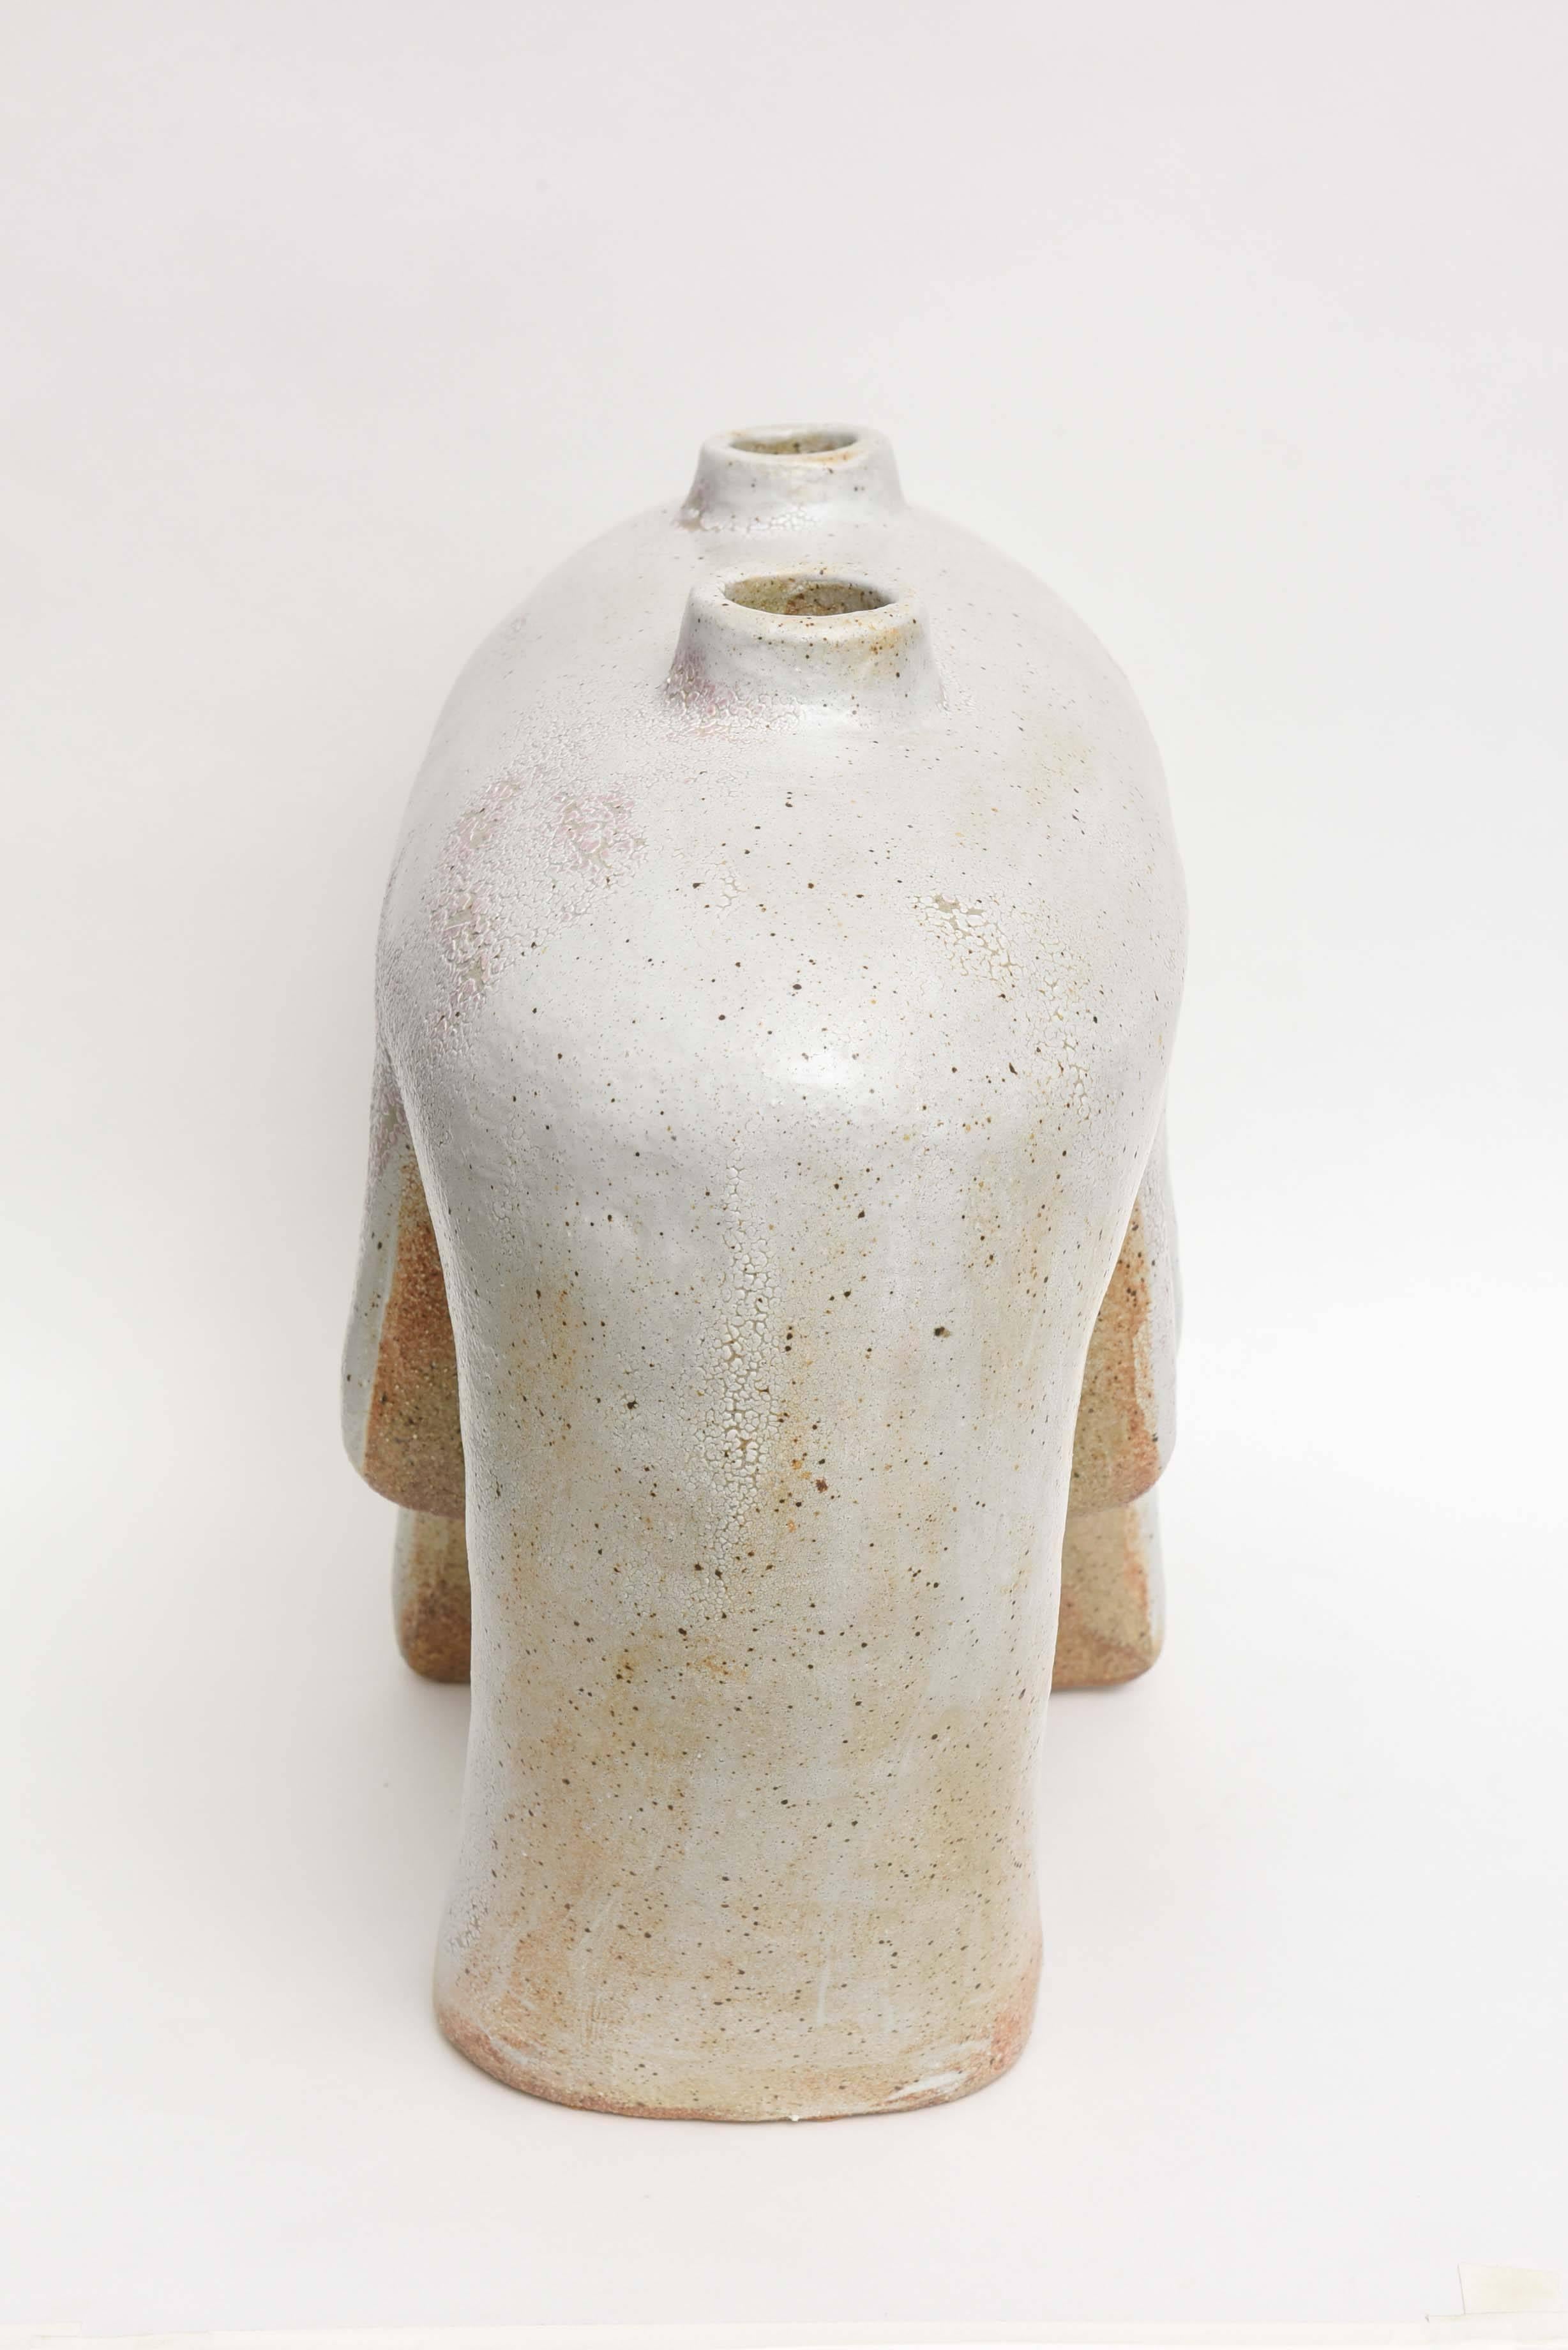 American Modern Ceramic Vase/Sculpture, Daric Harvie 1